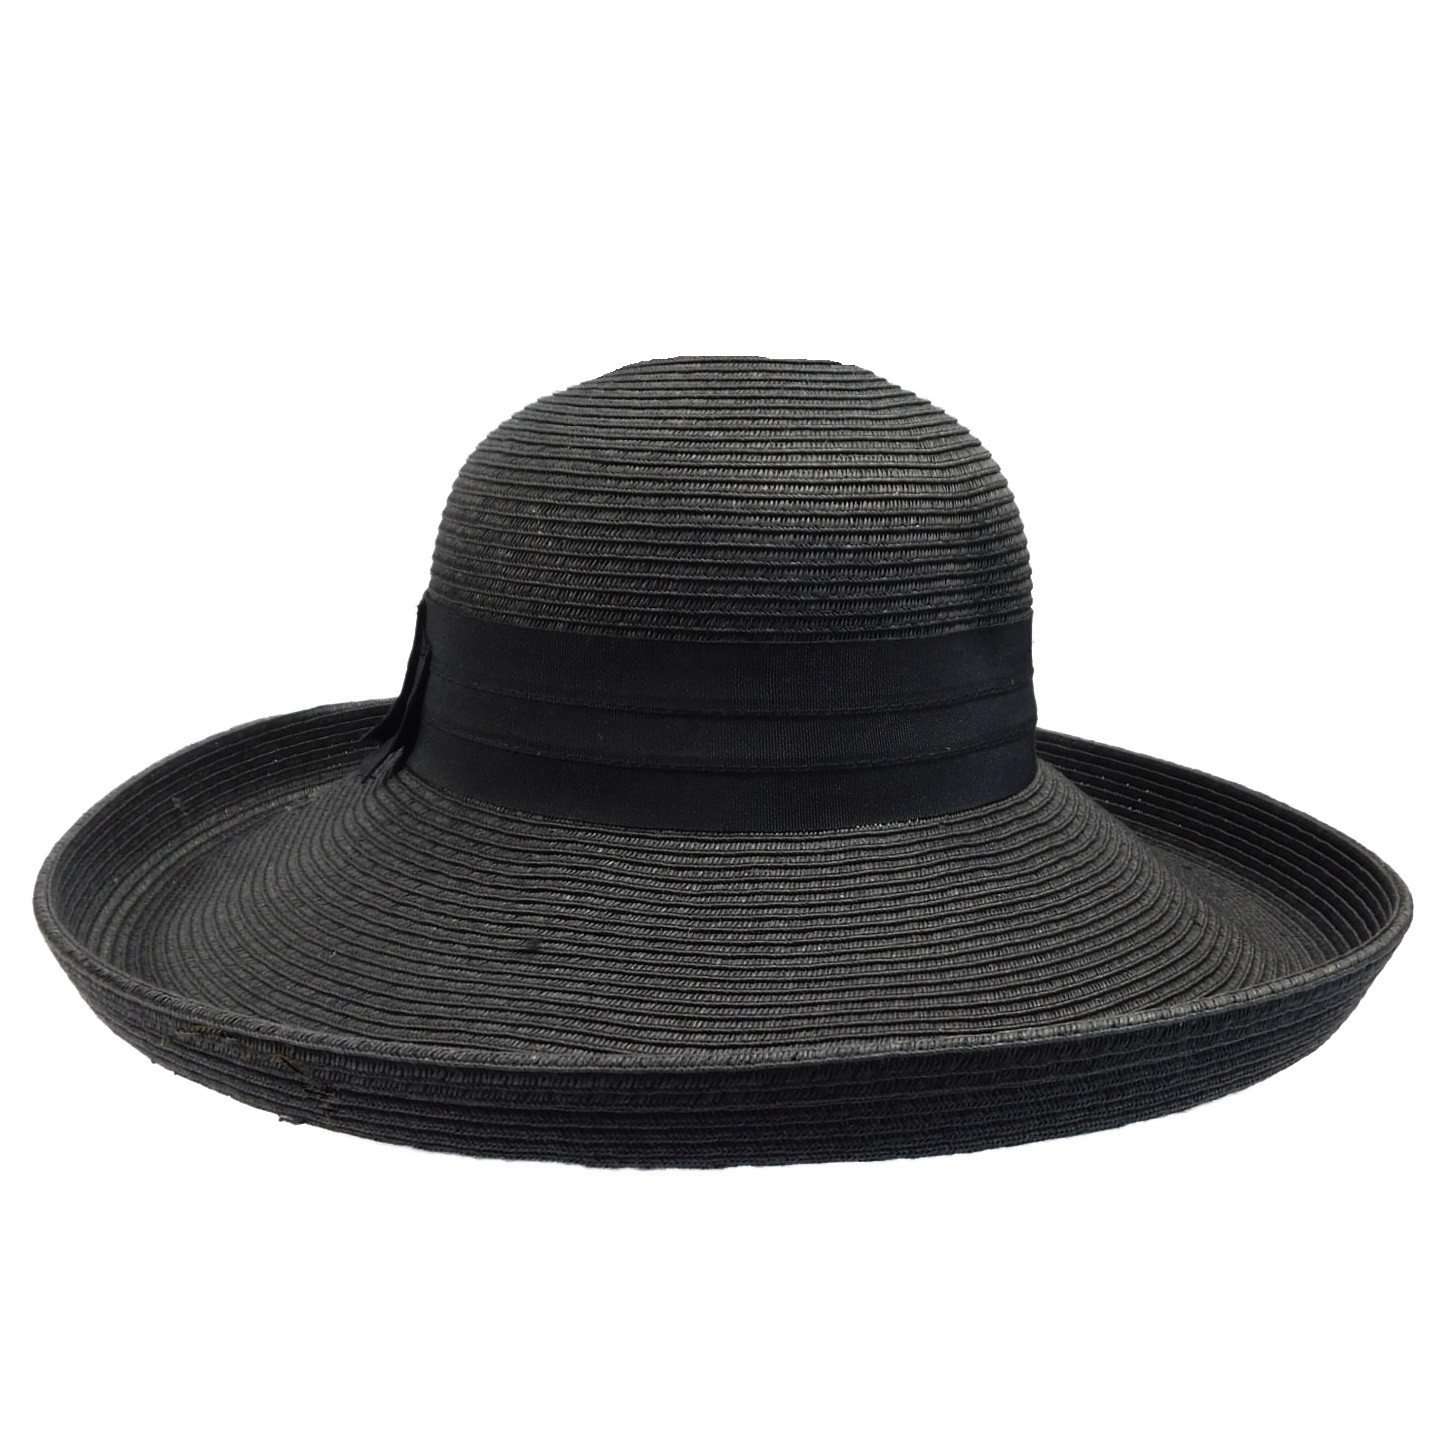 Large Up Turned Brim Sun Hat Wide Brim Hat Boardwalk Style Hats WSPS835BK Black  